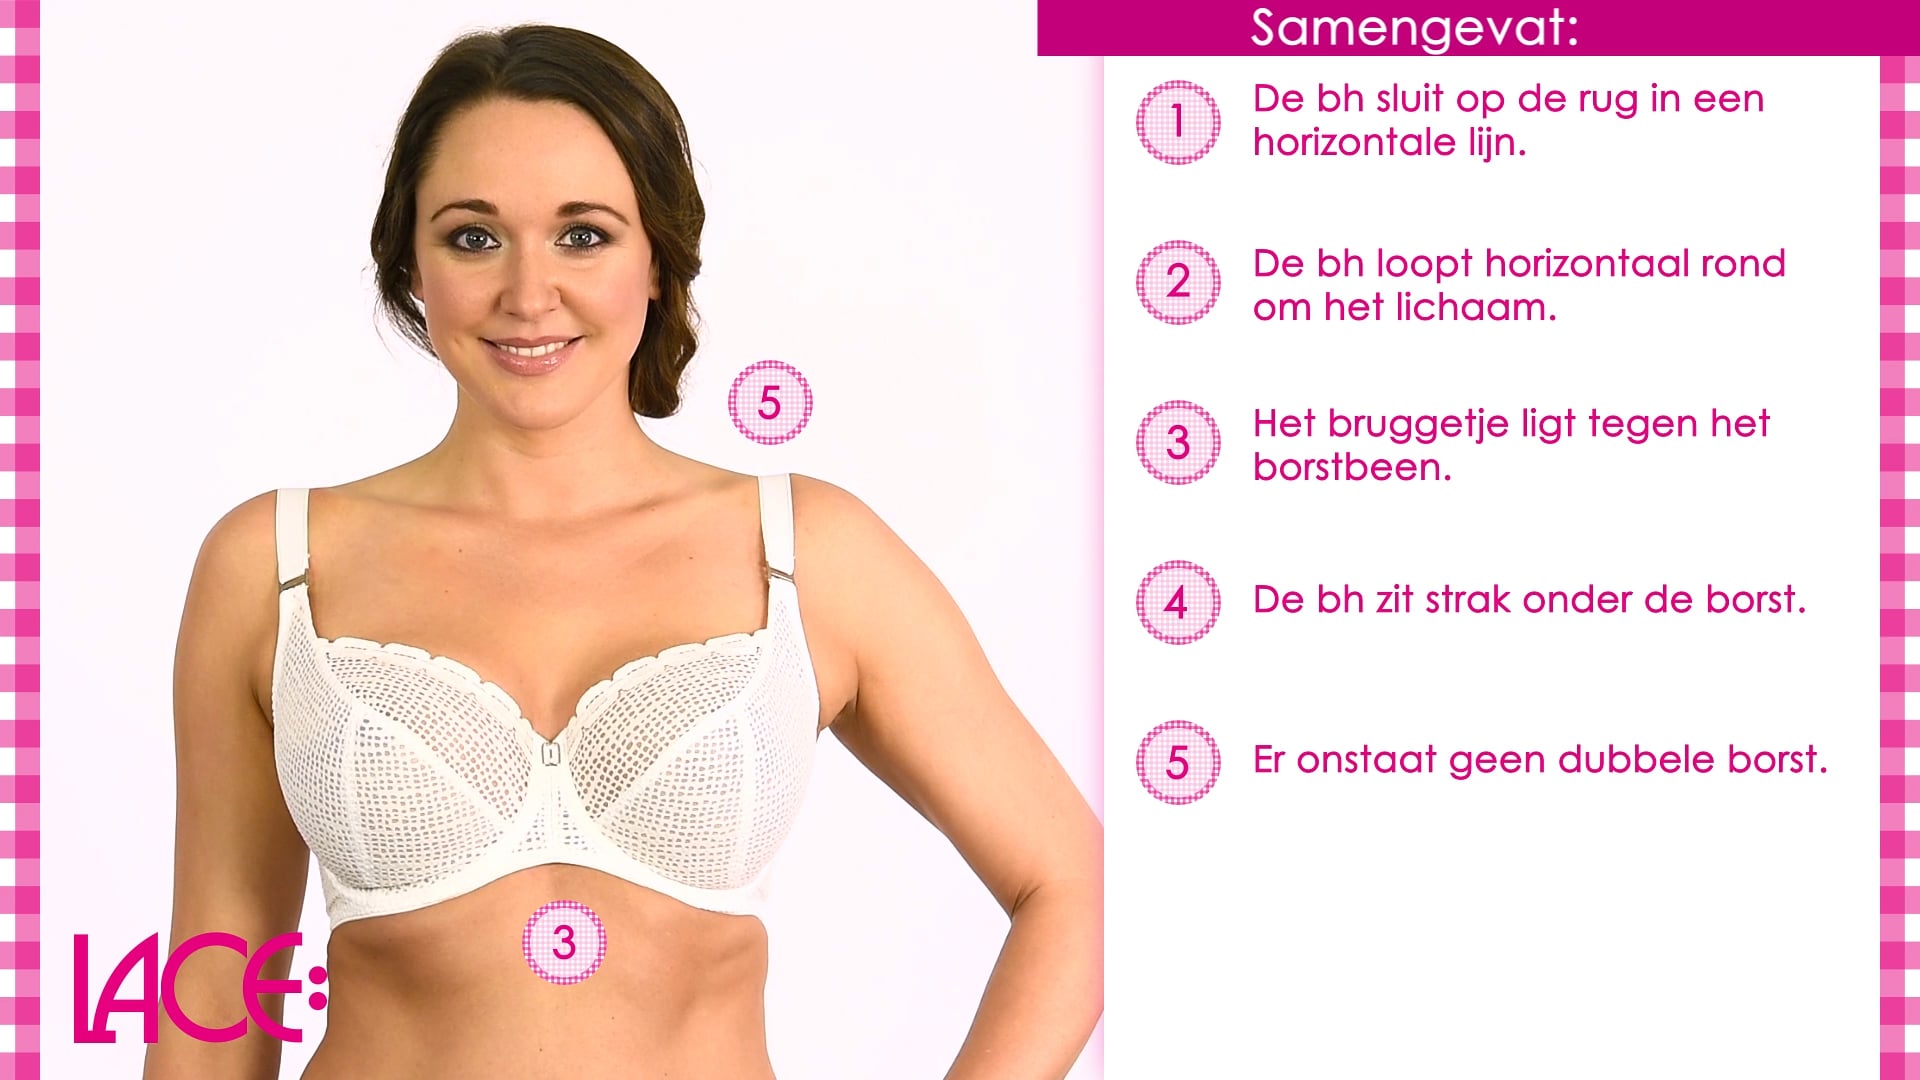 Yoghurt plakboek Jumping jack De kleine BH Gids - NL- Model 70F | Lace-lingerie.nl on Vimeo